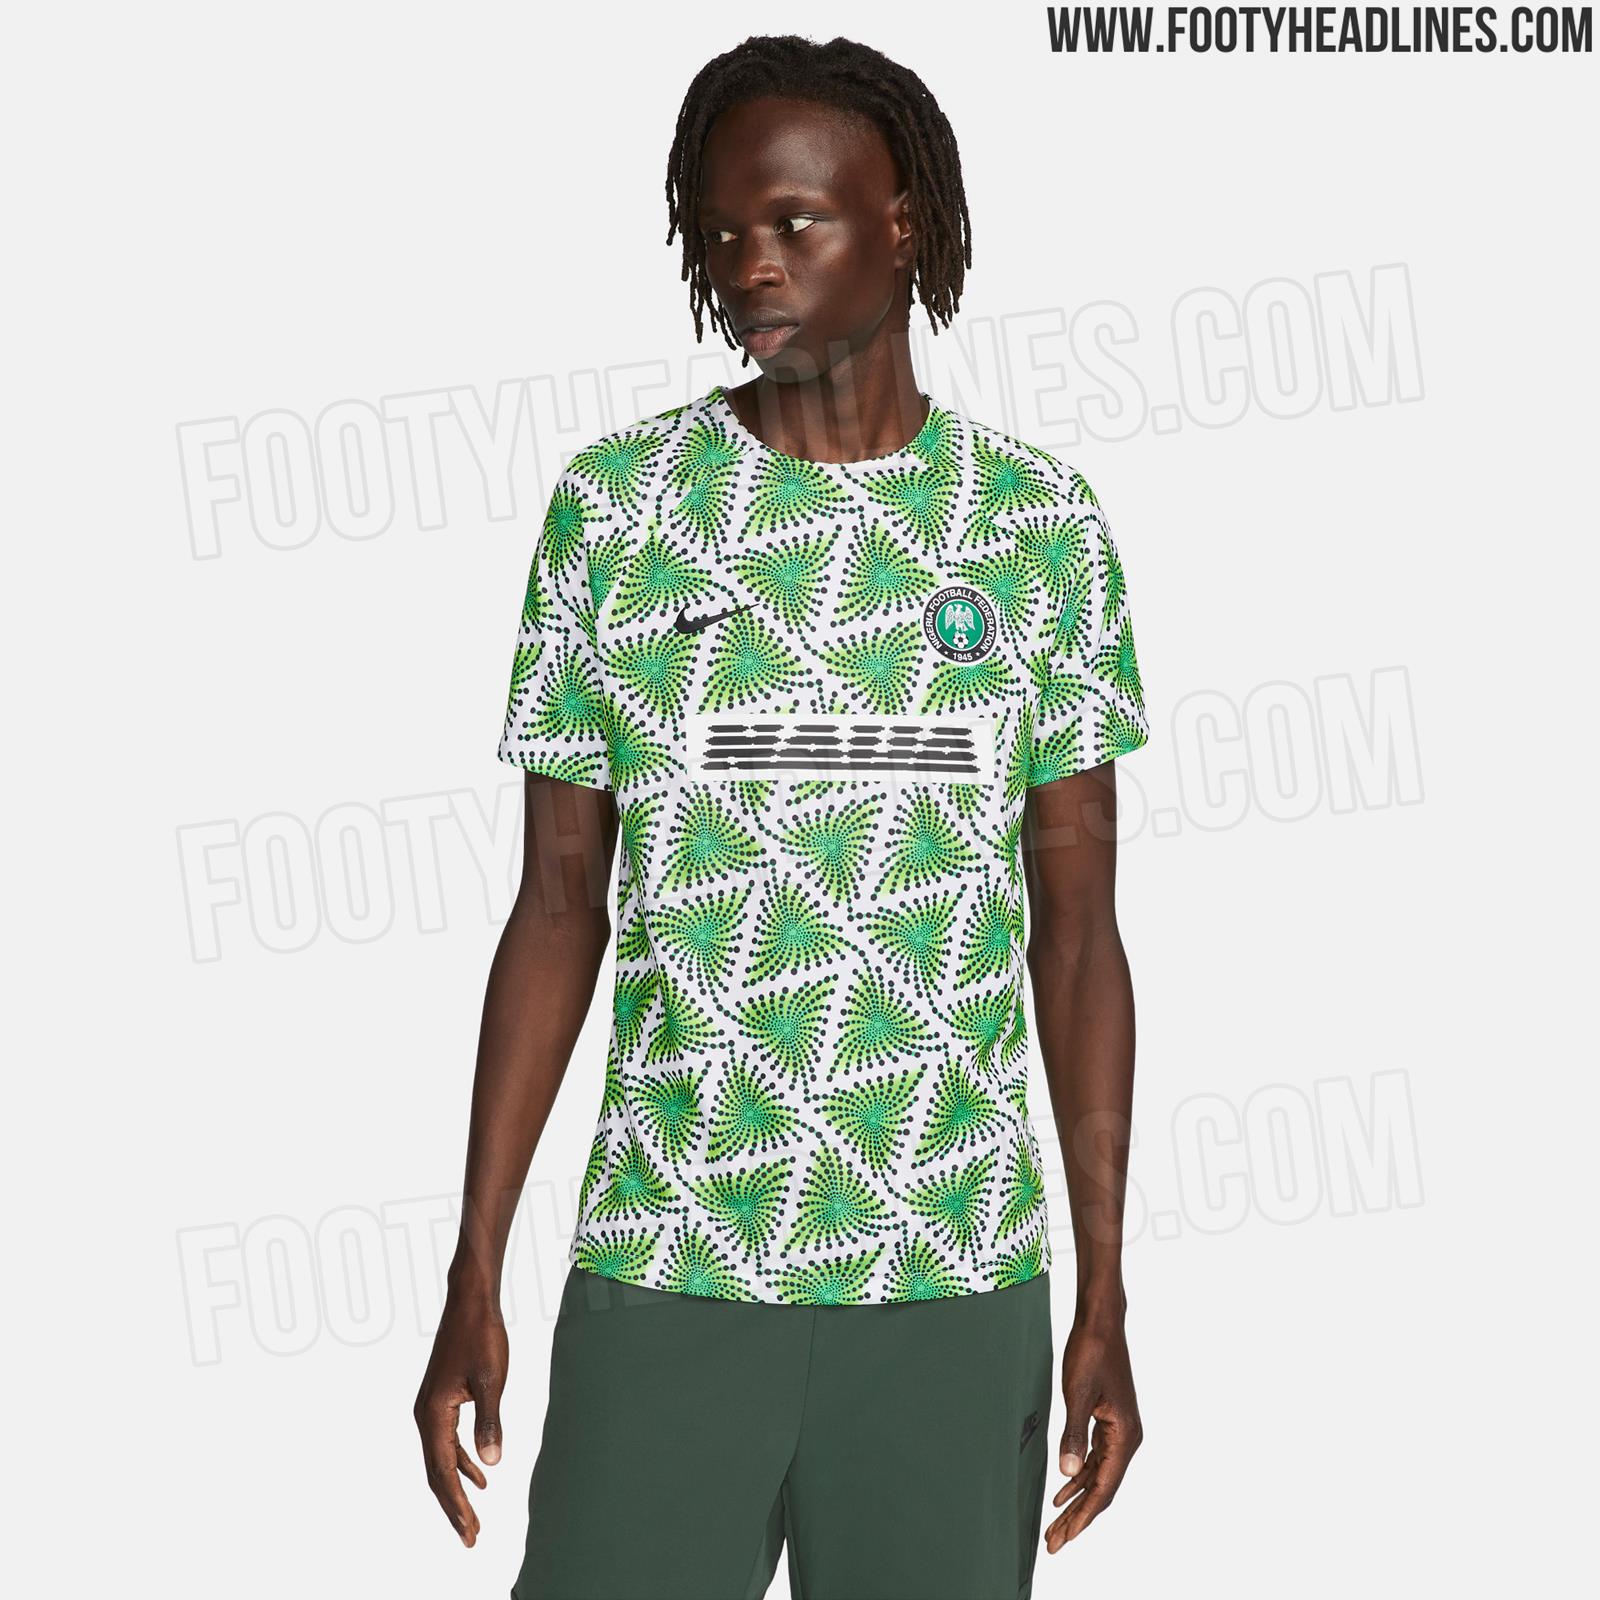 All Nike 2022 International Pre-Match Shirts Leaked - Footy Headlines